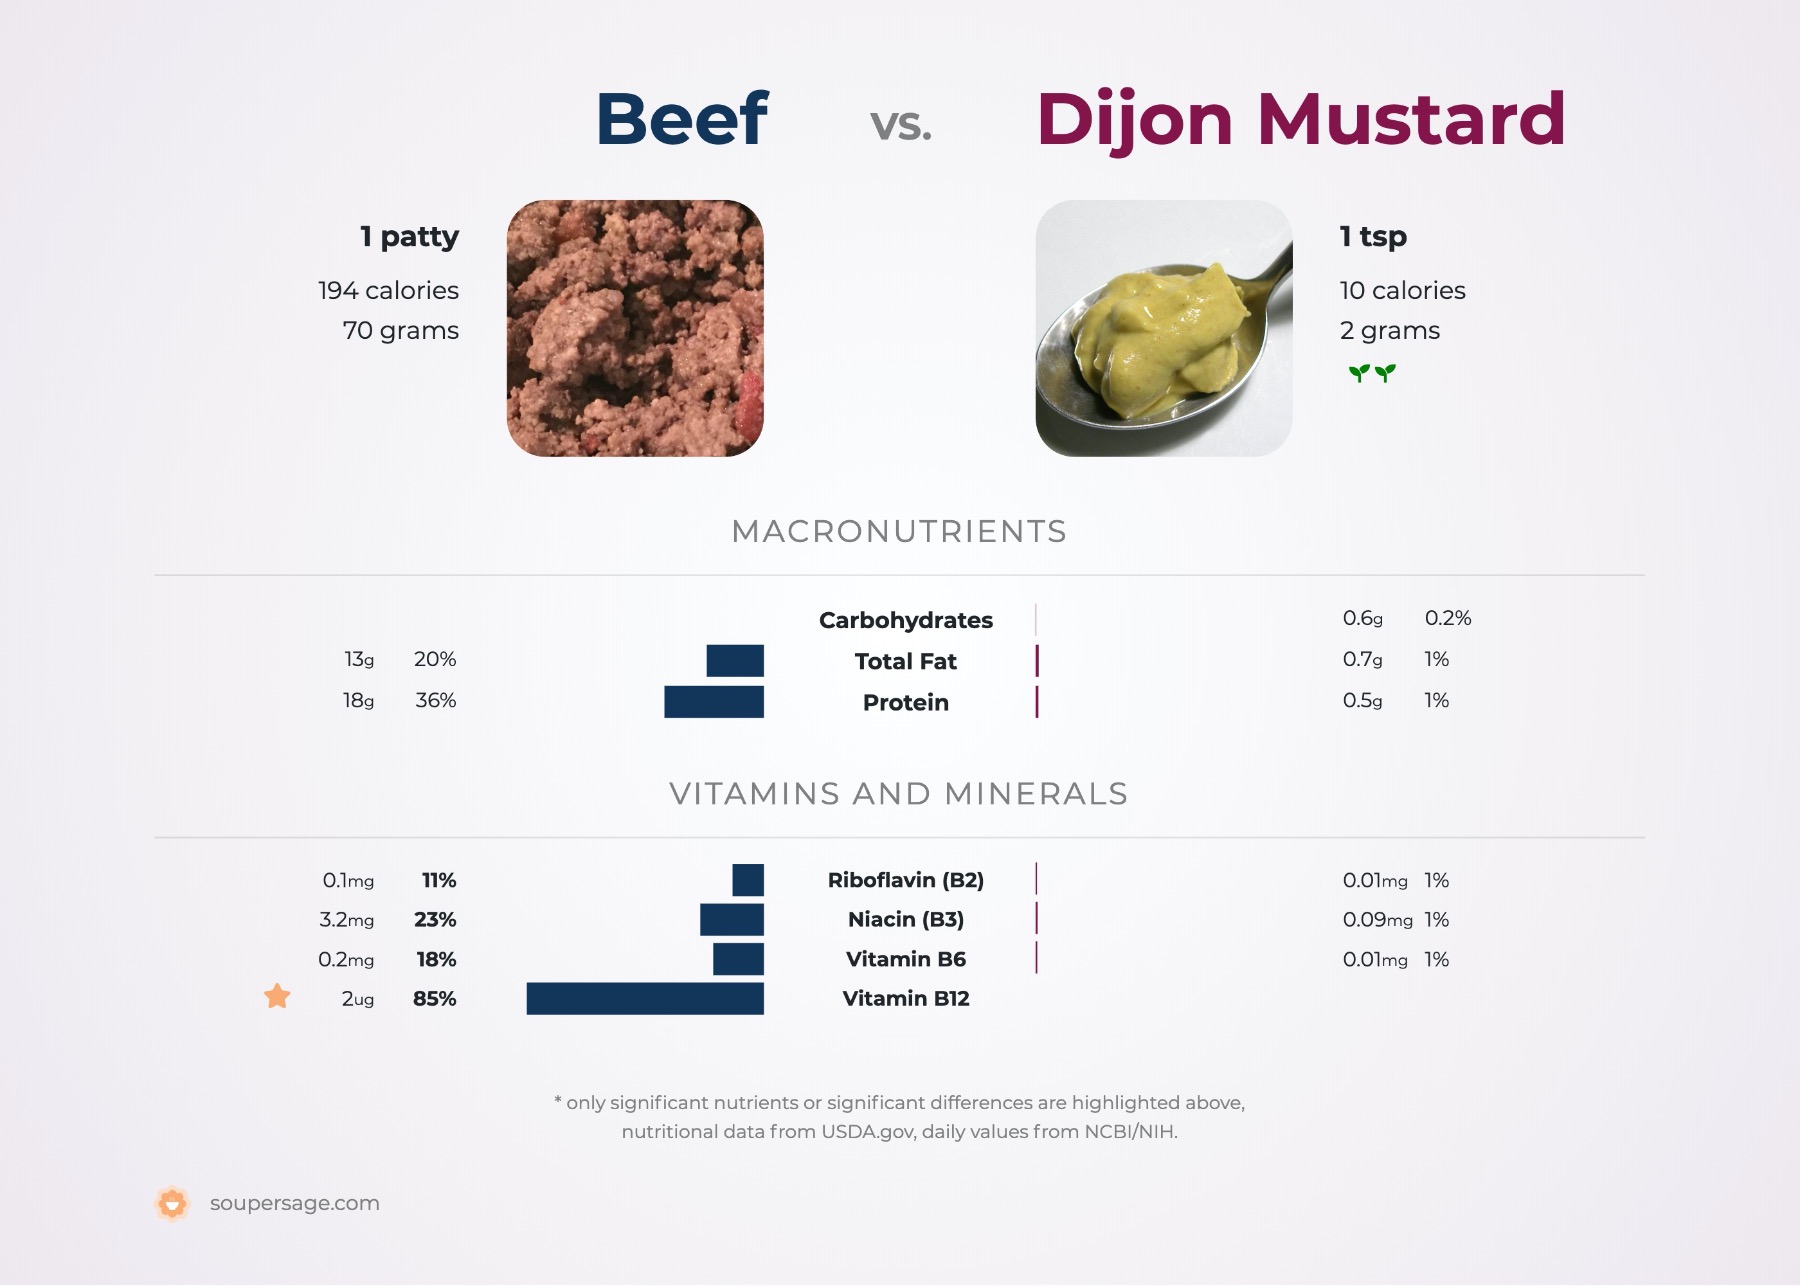 nutrition comparison of beef vs. dijon mustard